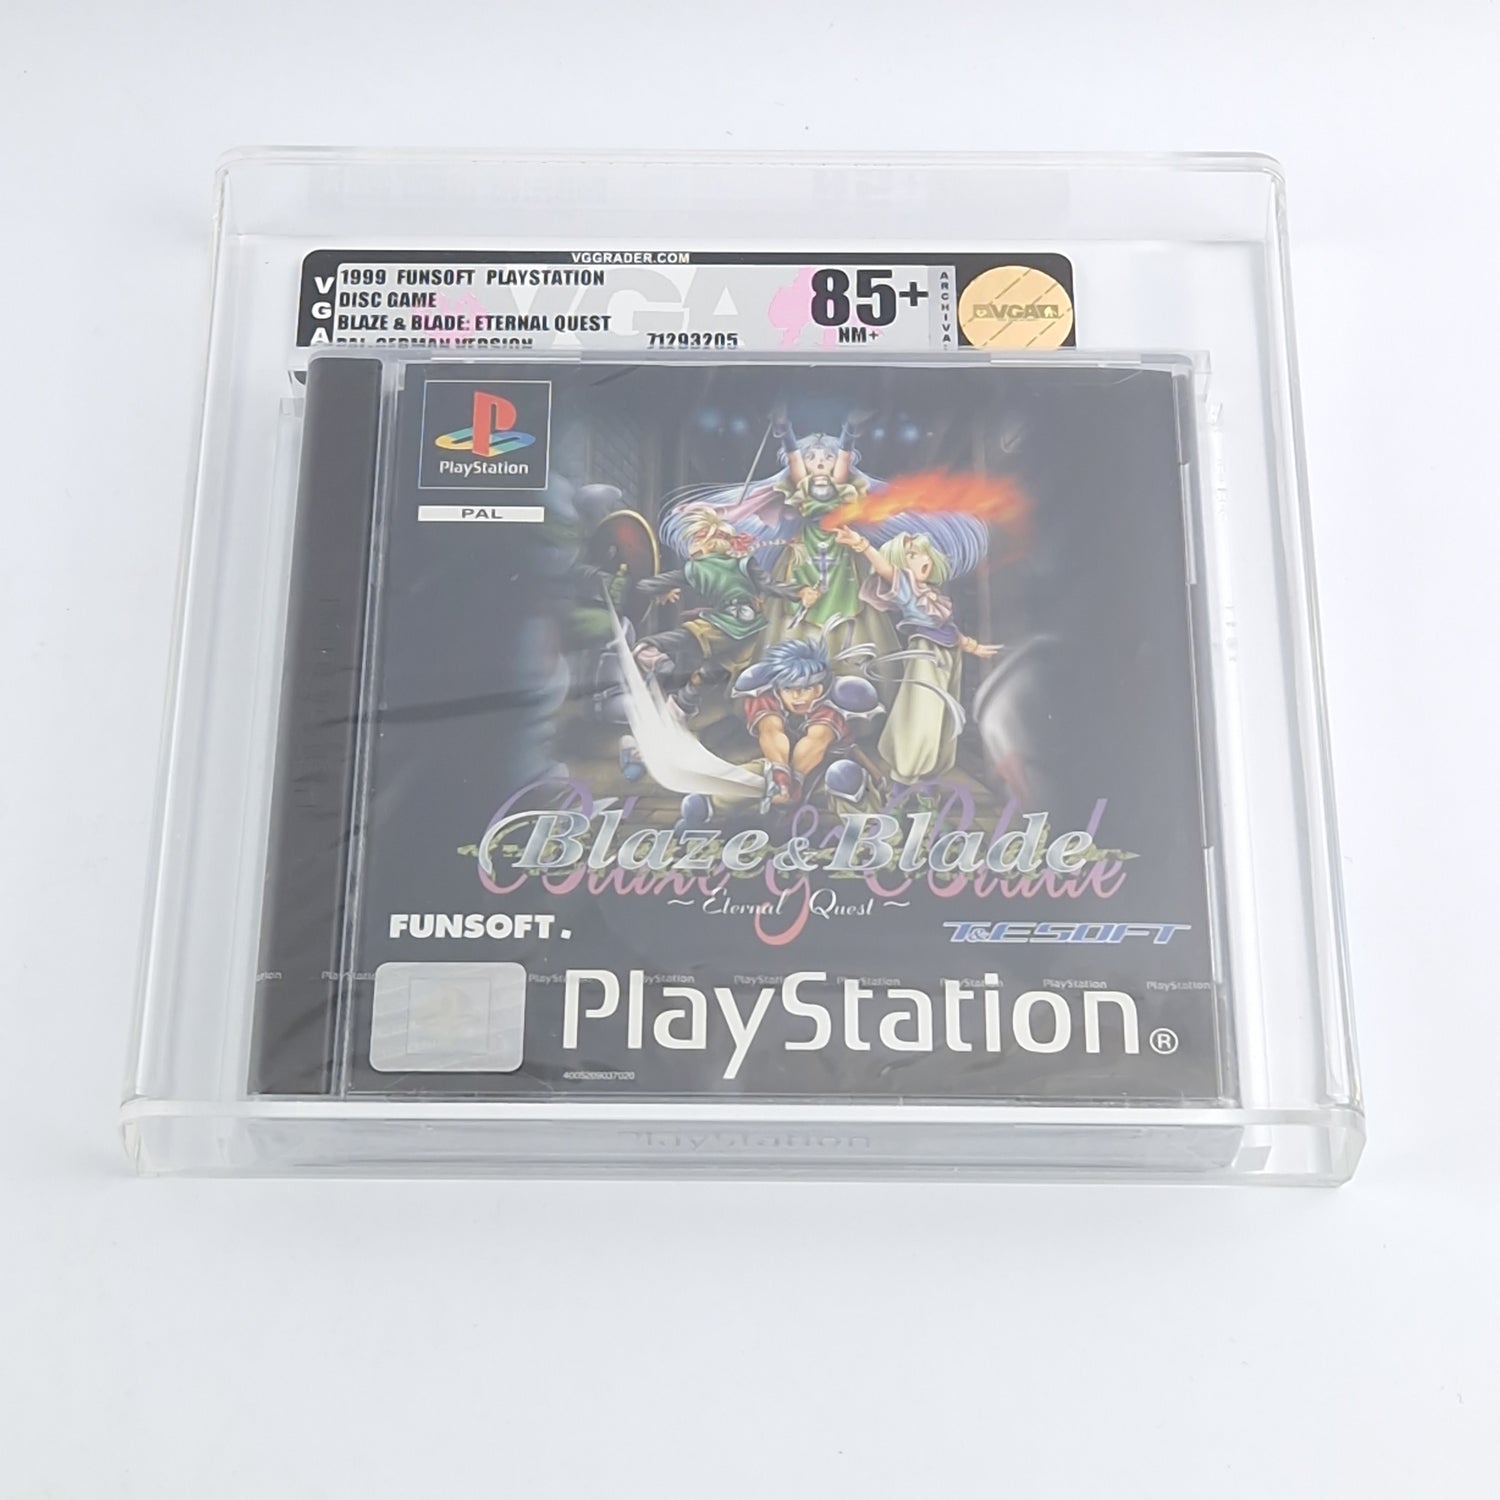 Sony Playstation 1: Blaze & Blade Eternal Quest OVP NEW SEALED PAL PS1 VGA 85+